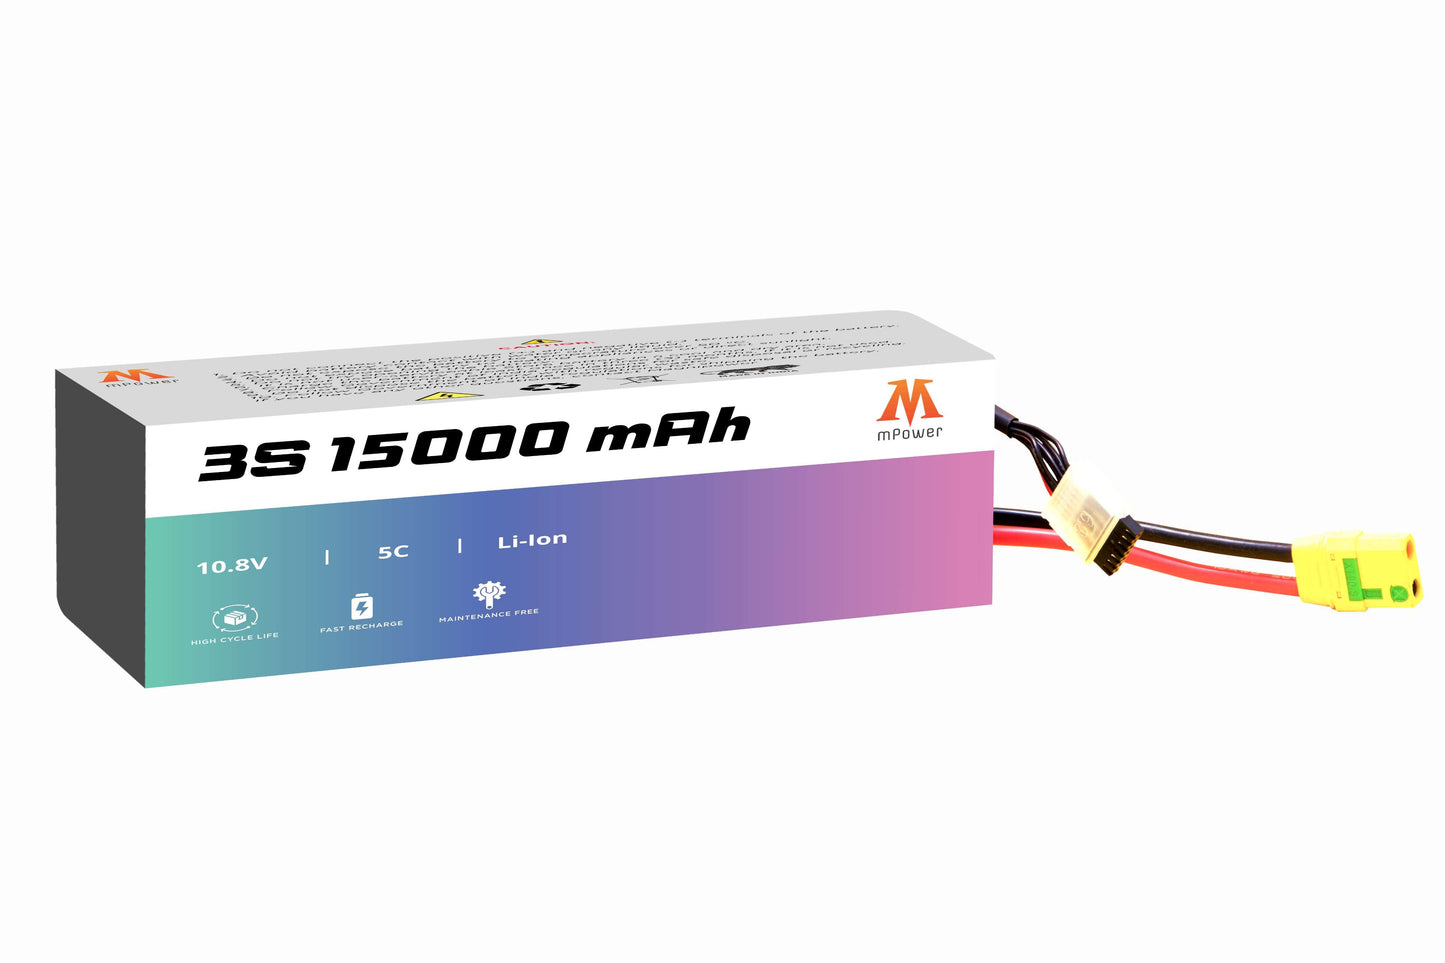  3S 15000mAh 5C Lithium-Ion Battery for Survey Drones